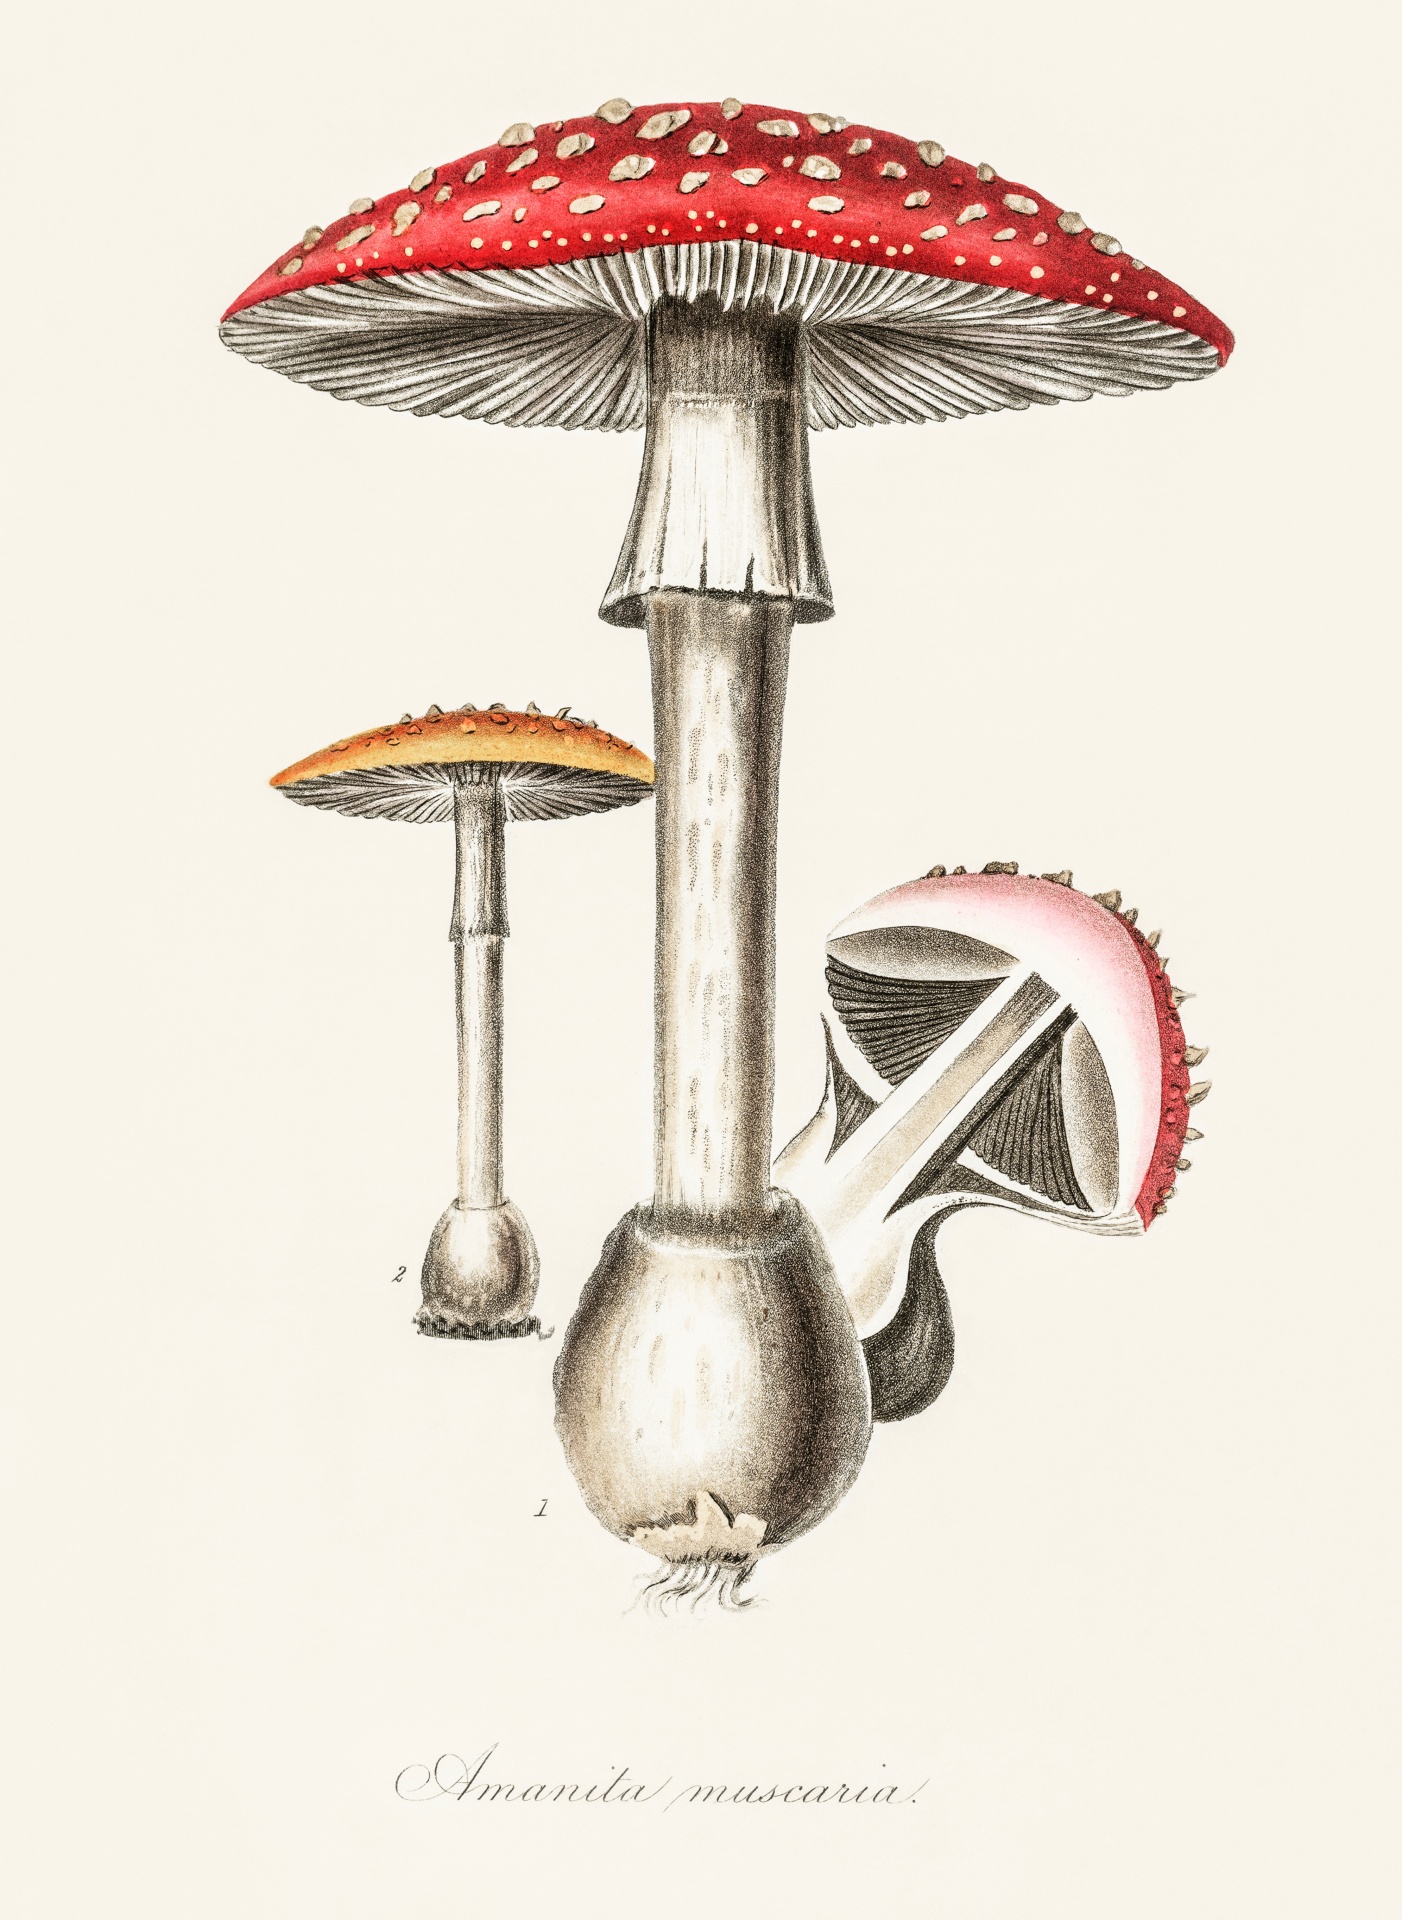 Mushrooms Champions Vintage Illustration Old Antique Art Natural History Drawing Poster Print Public Domain